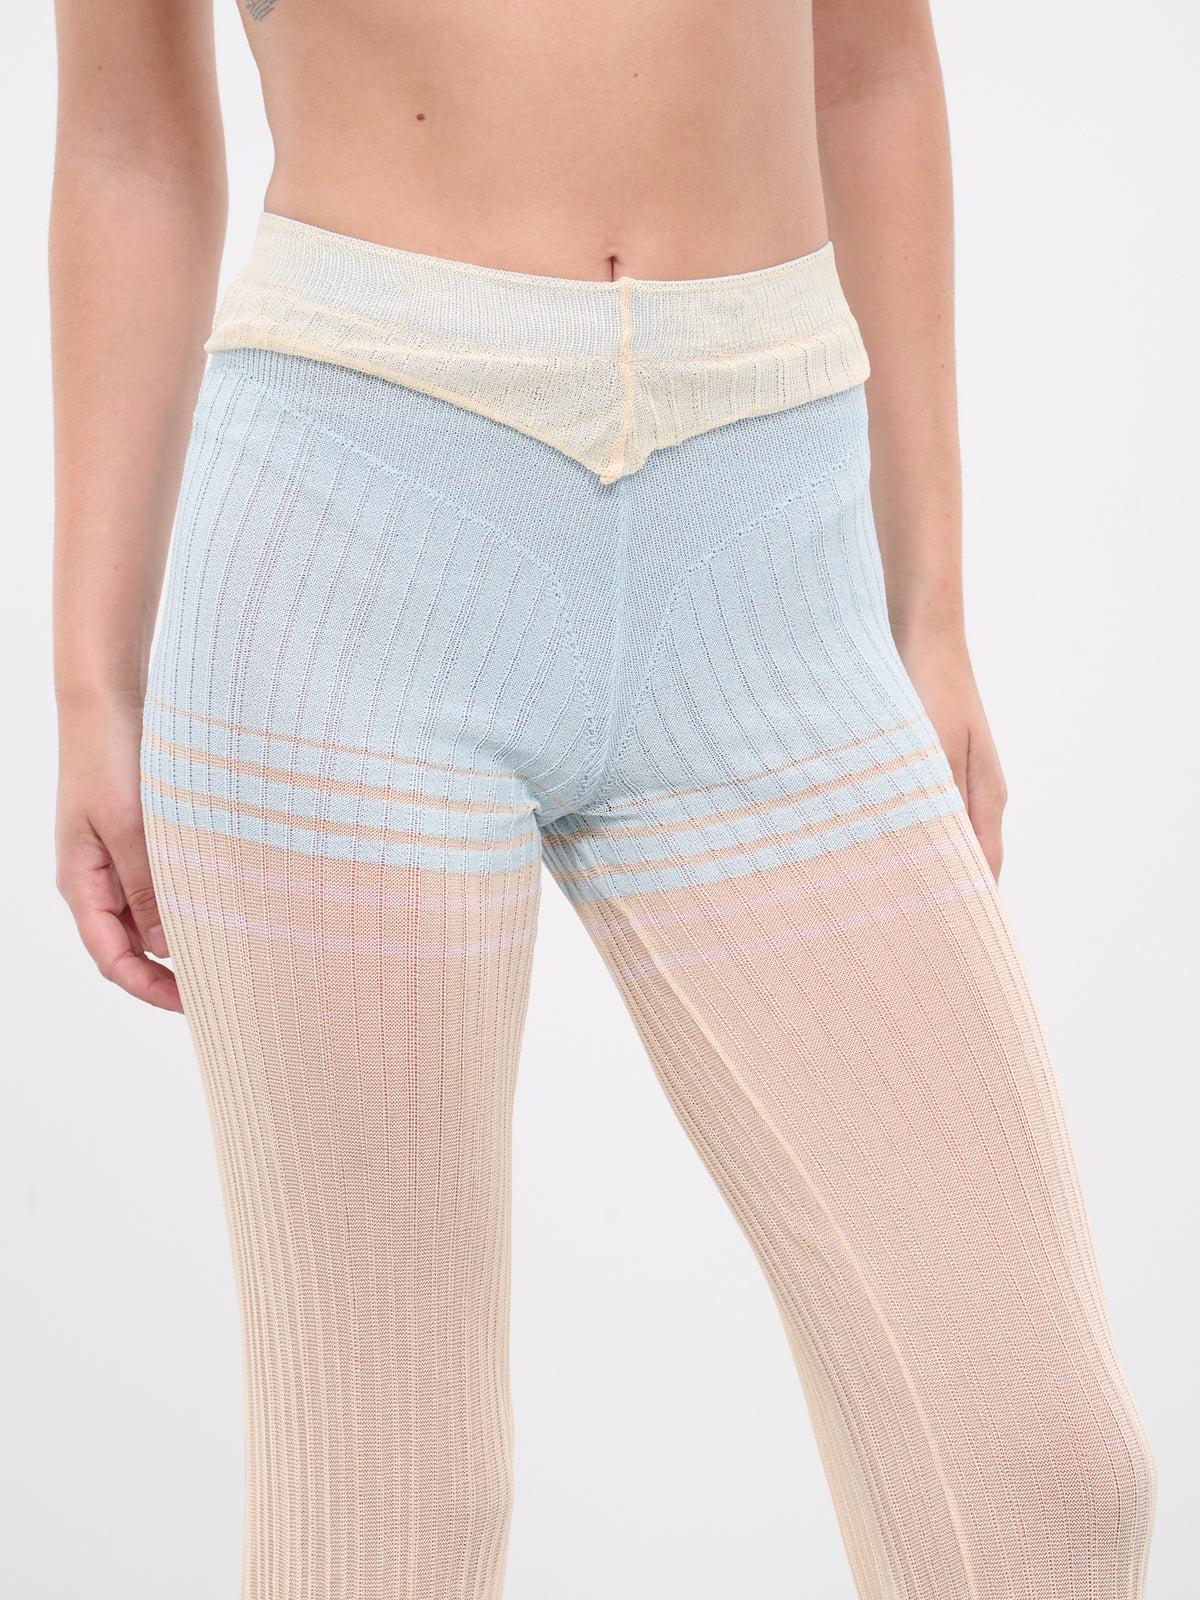 Sheer Knit Pants (P0101-BLUE-CREAM)